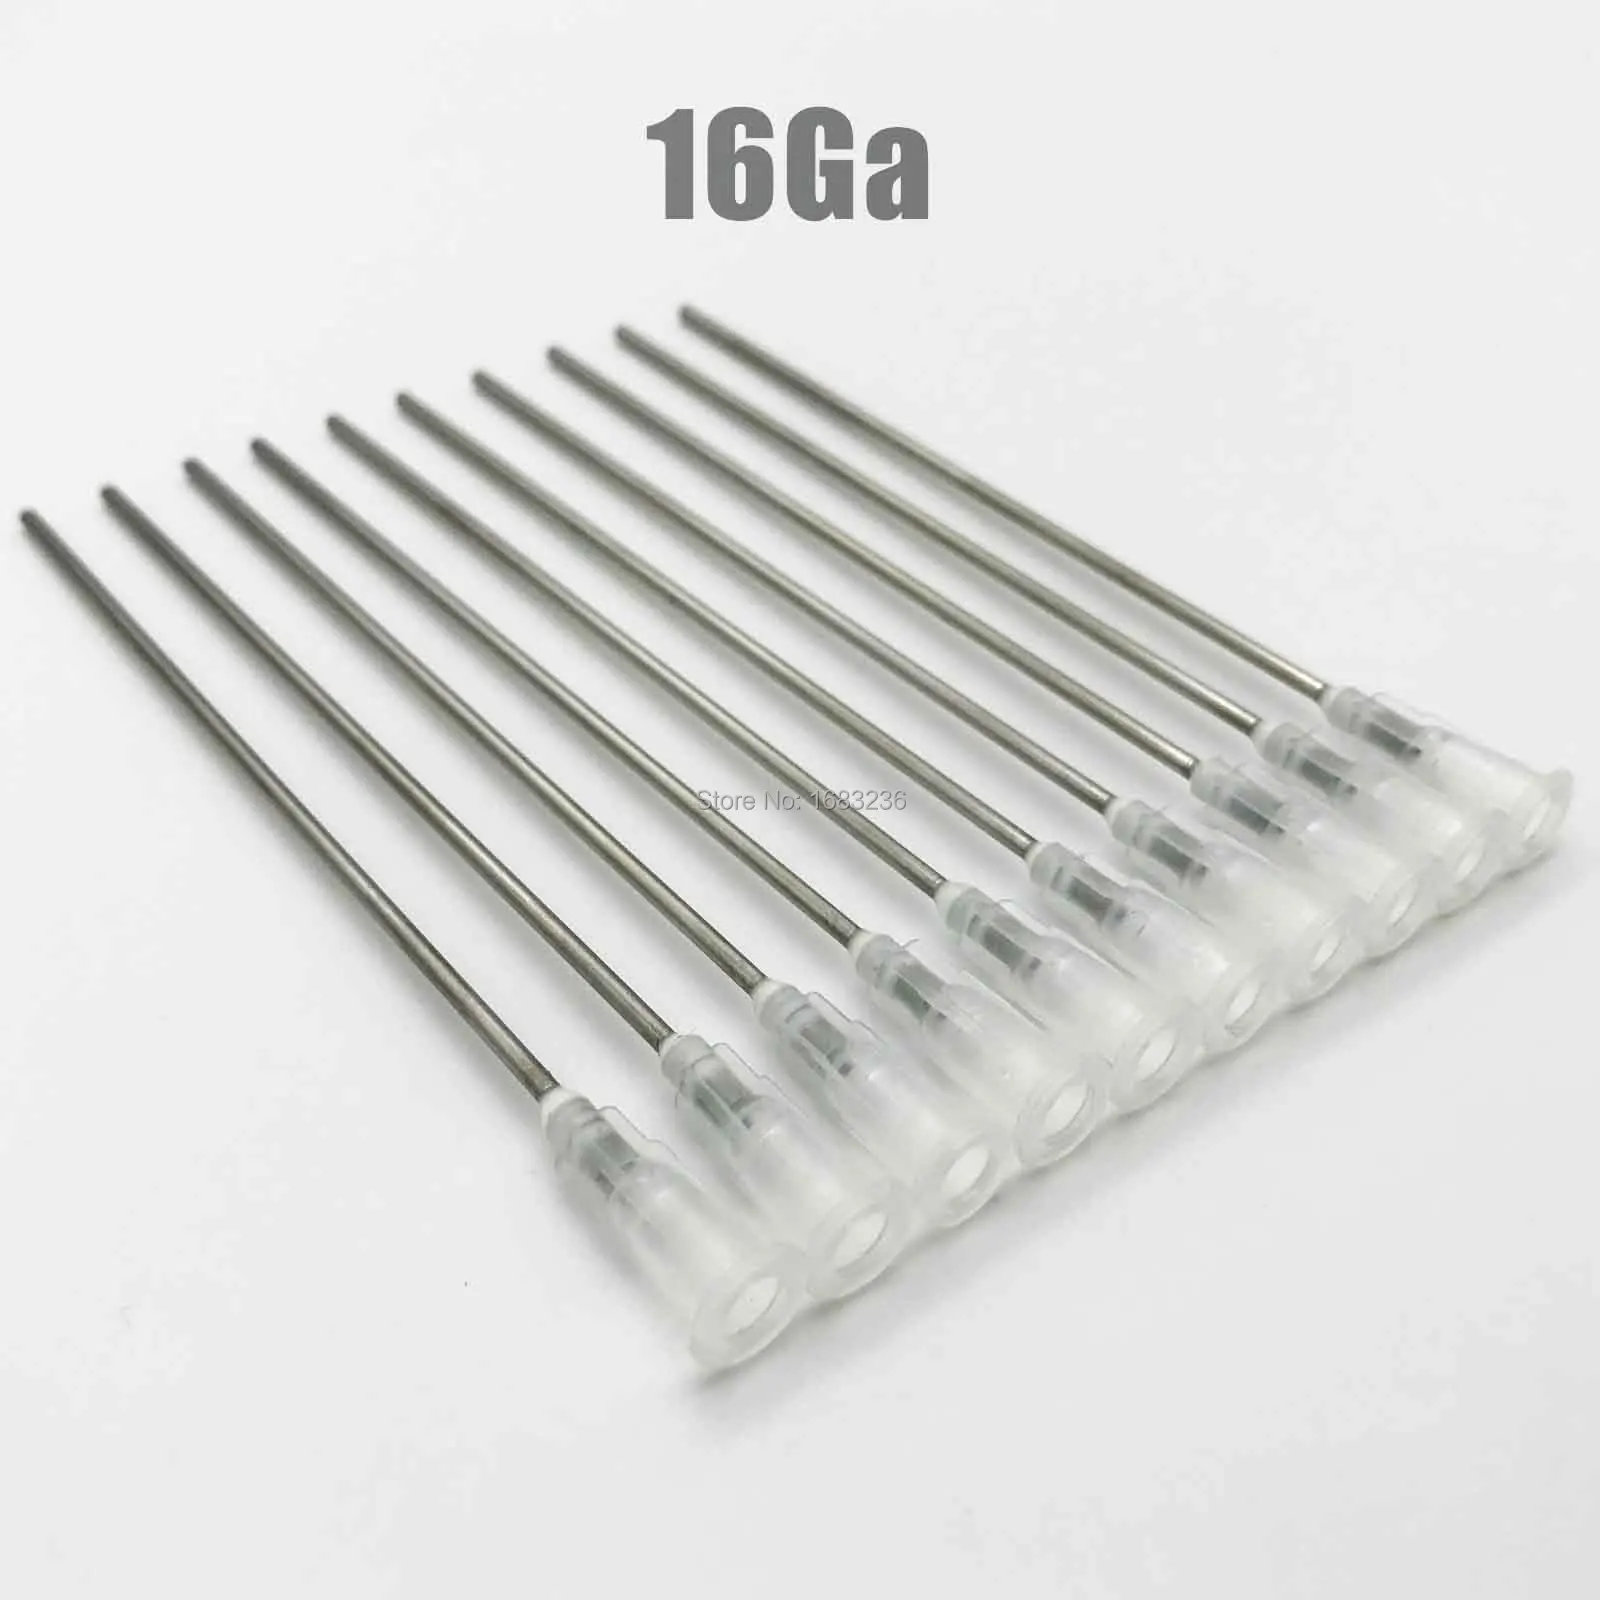 10 pcs Blunt dispensing needles syringe needle tips 4" 16Ga 100MM 